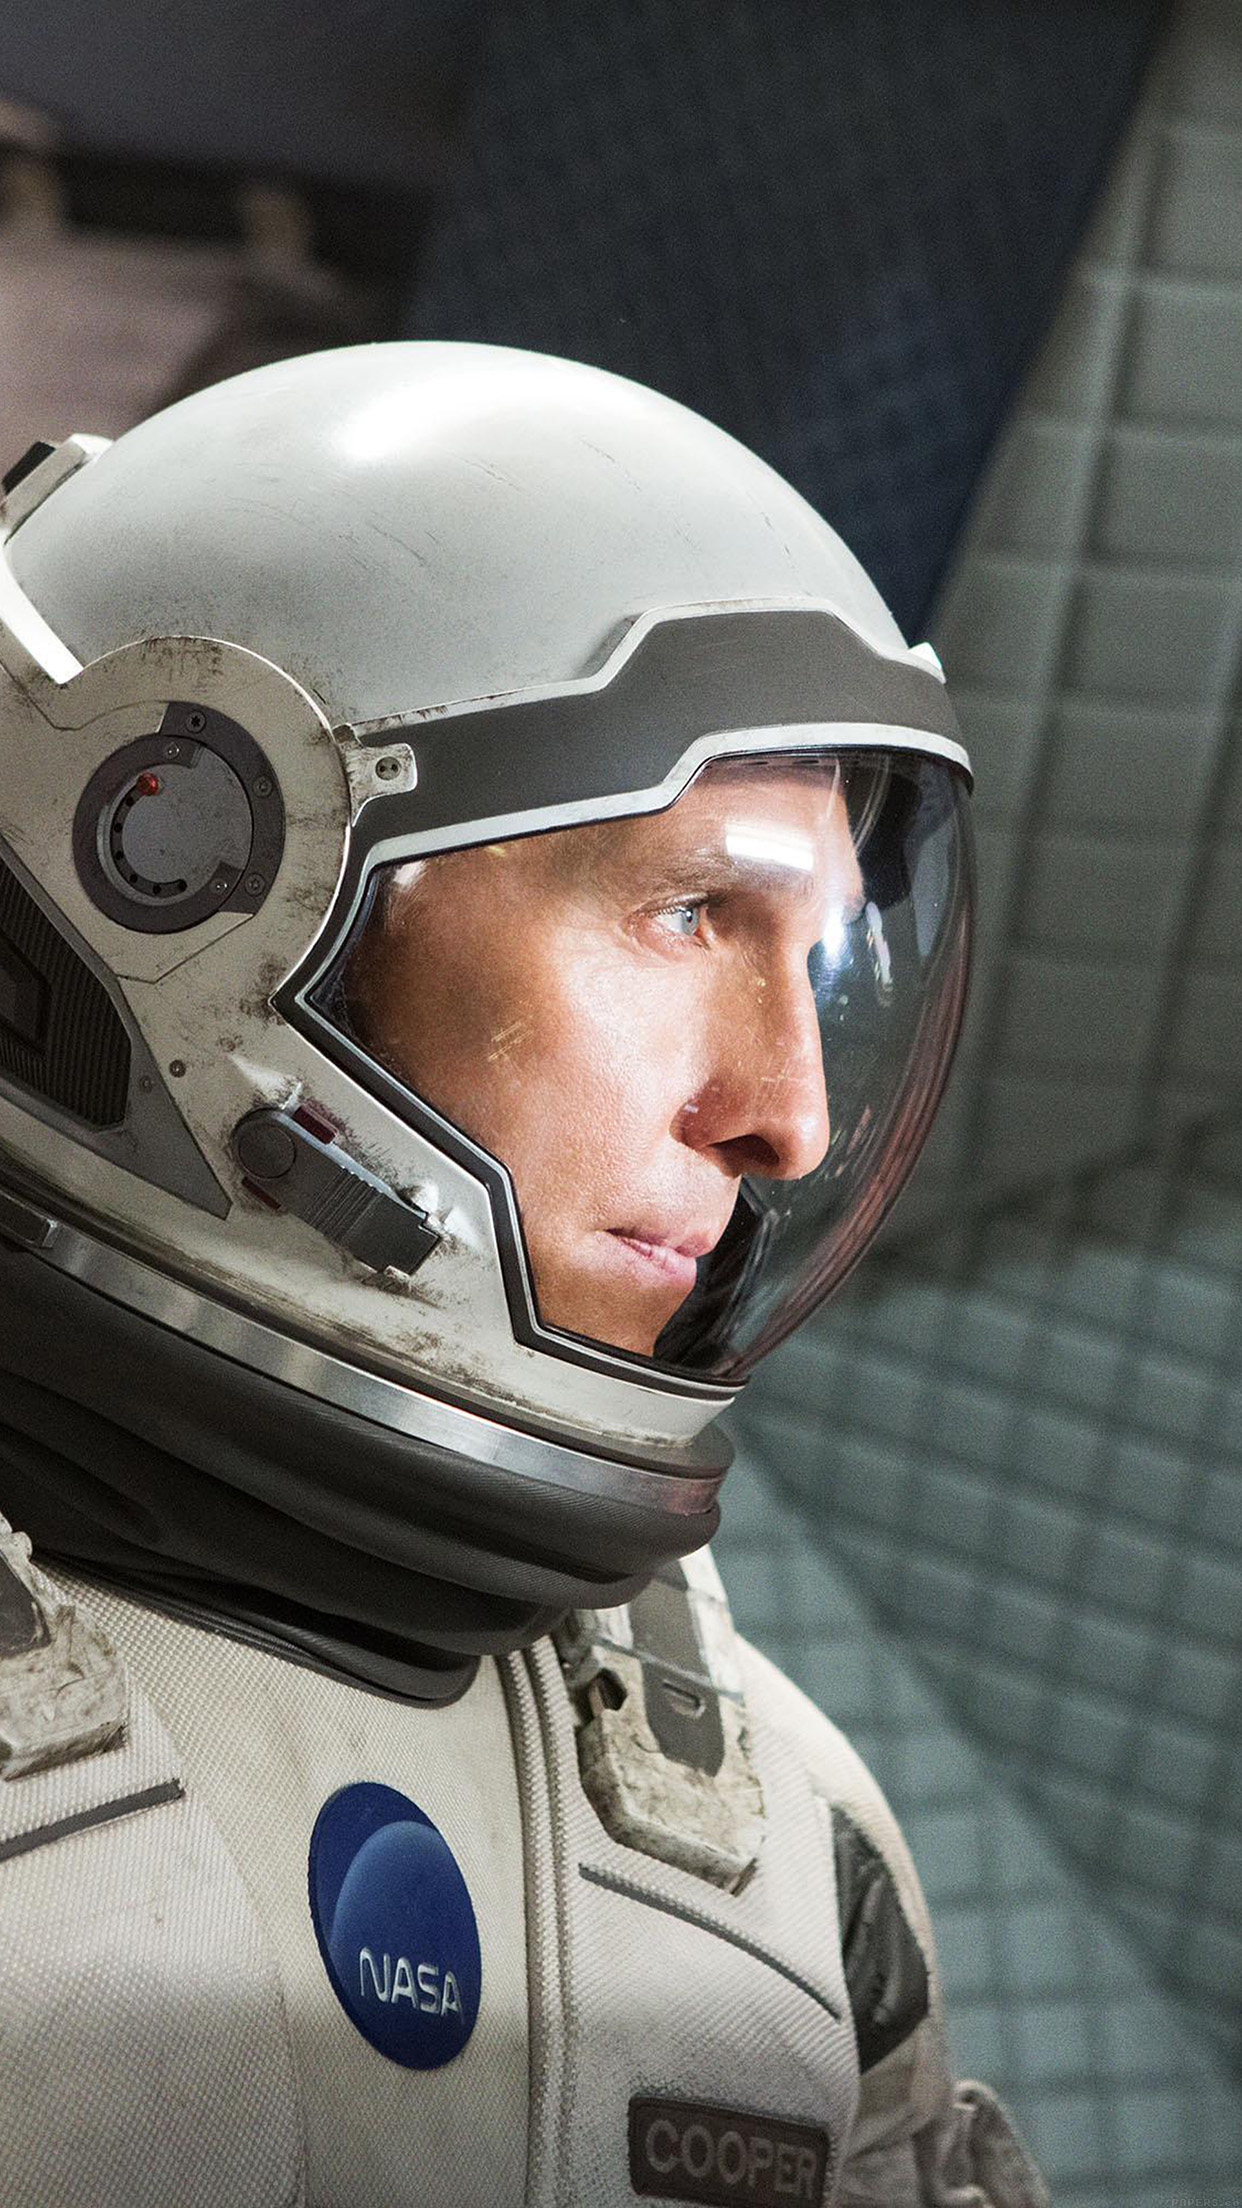 Interstellar Cooper Film Actor Matthew Mcconaughey Android wallpaper